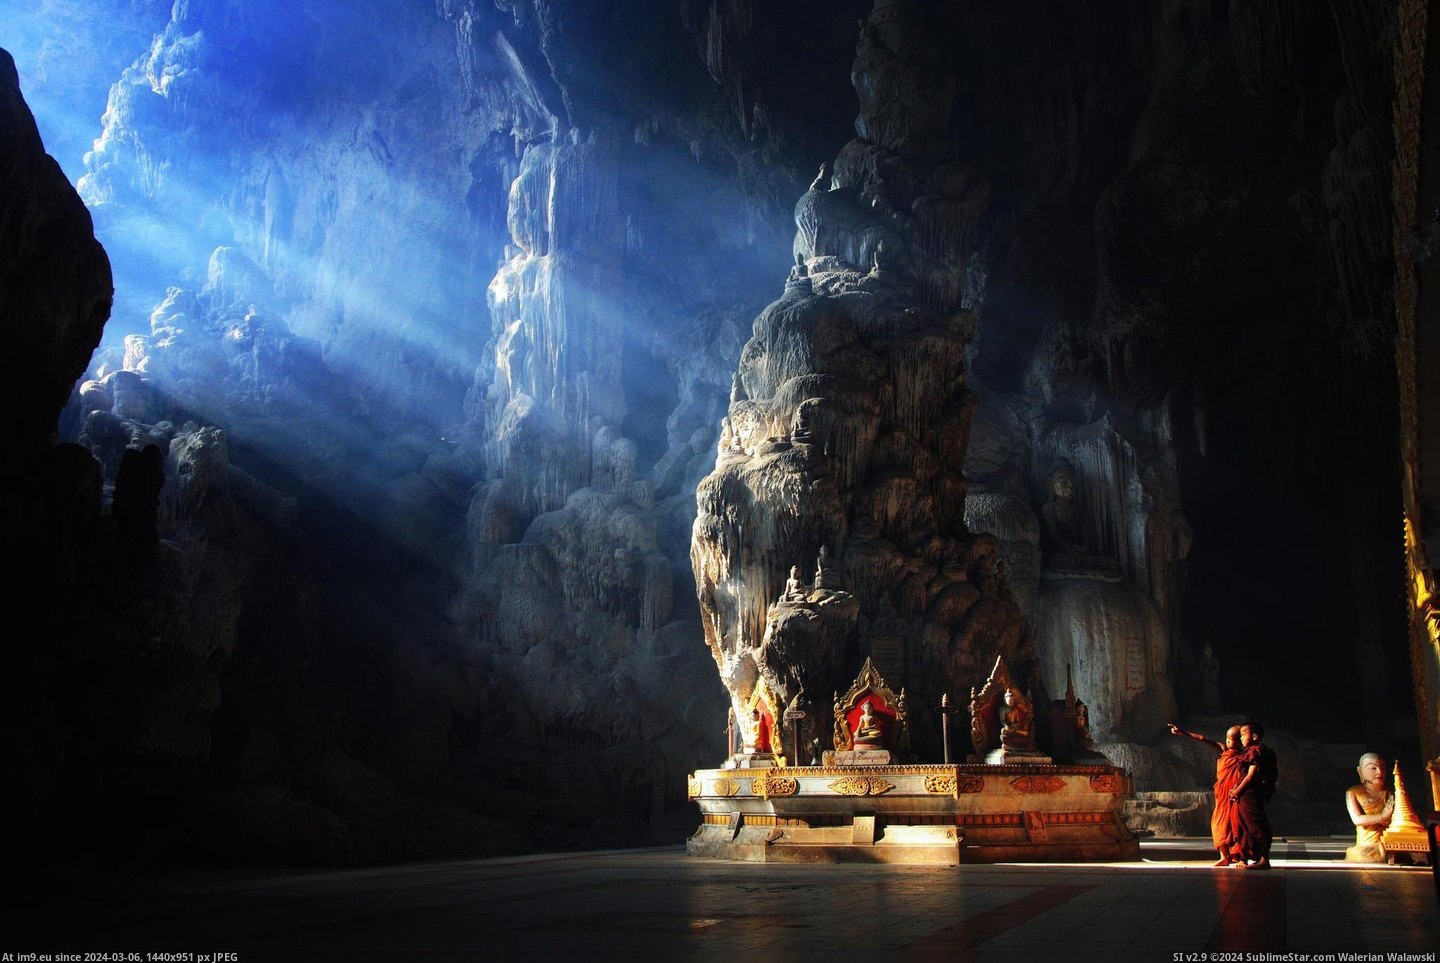 #Cave #Buddhist #Temple [Pics] A Buddhist temple inside a cave. Pic. (Изображение из альбом My r/PICS favs))